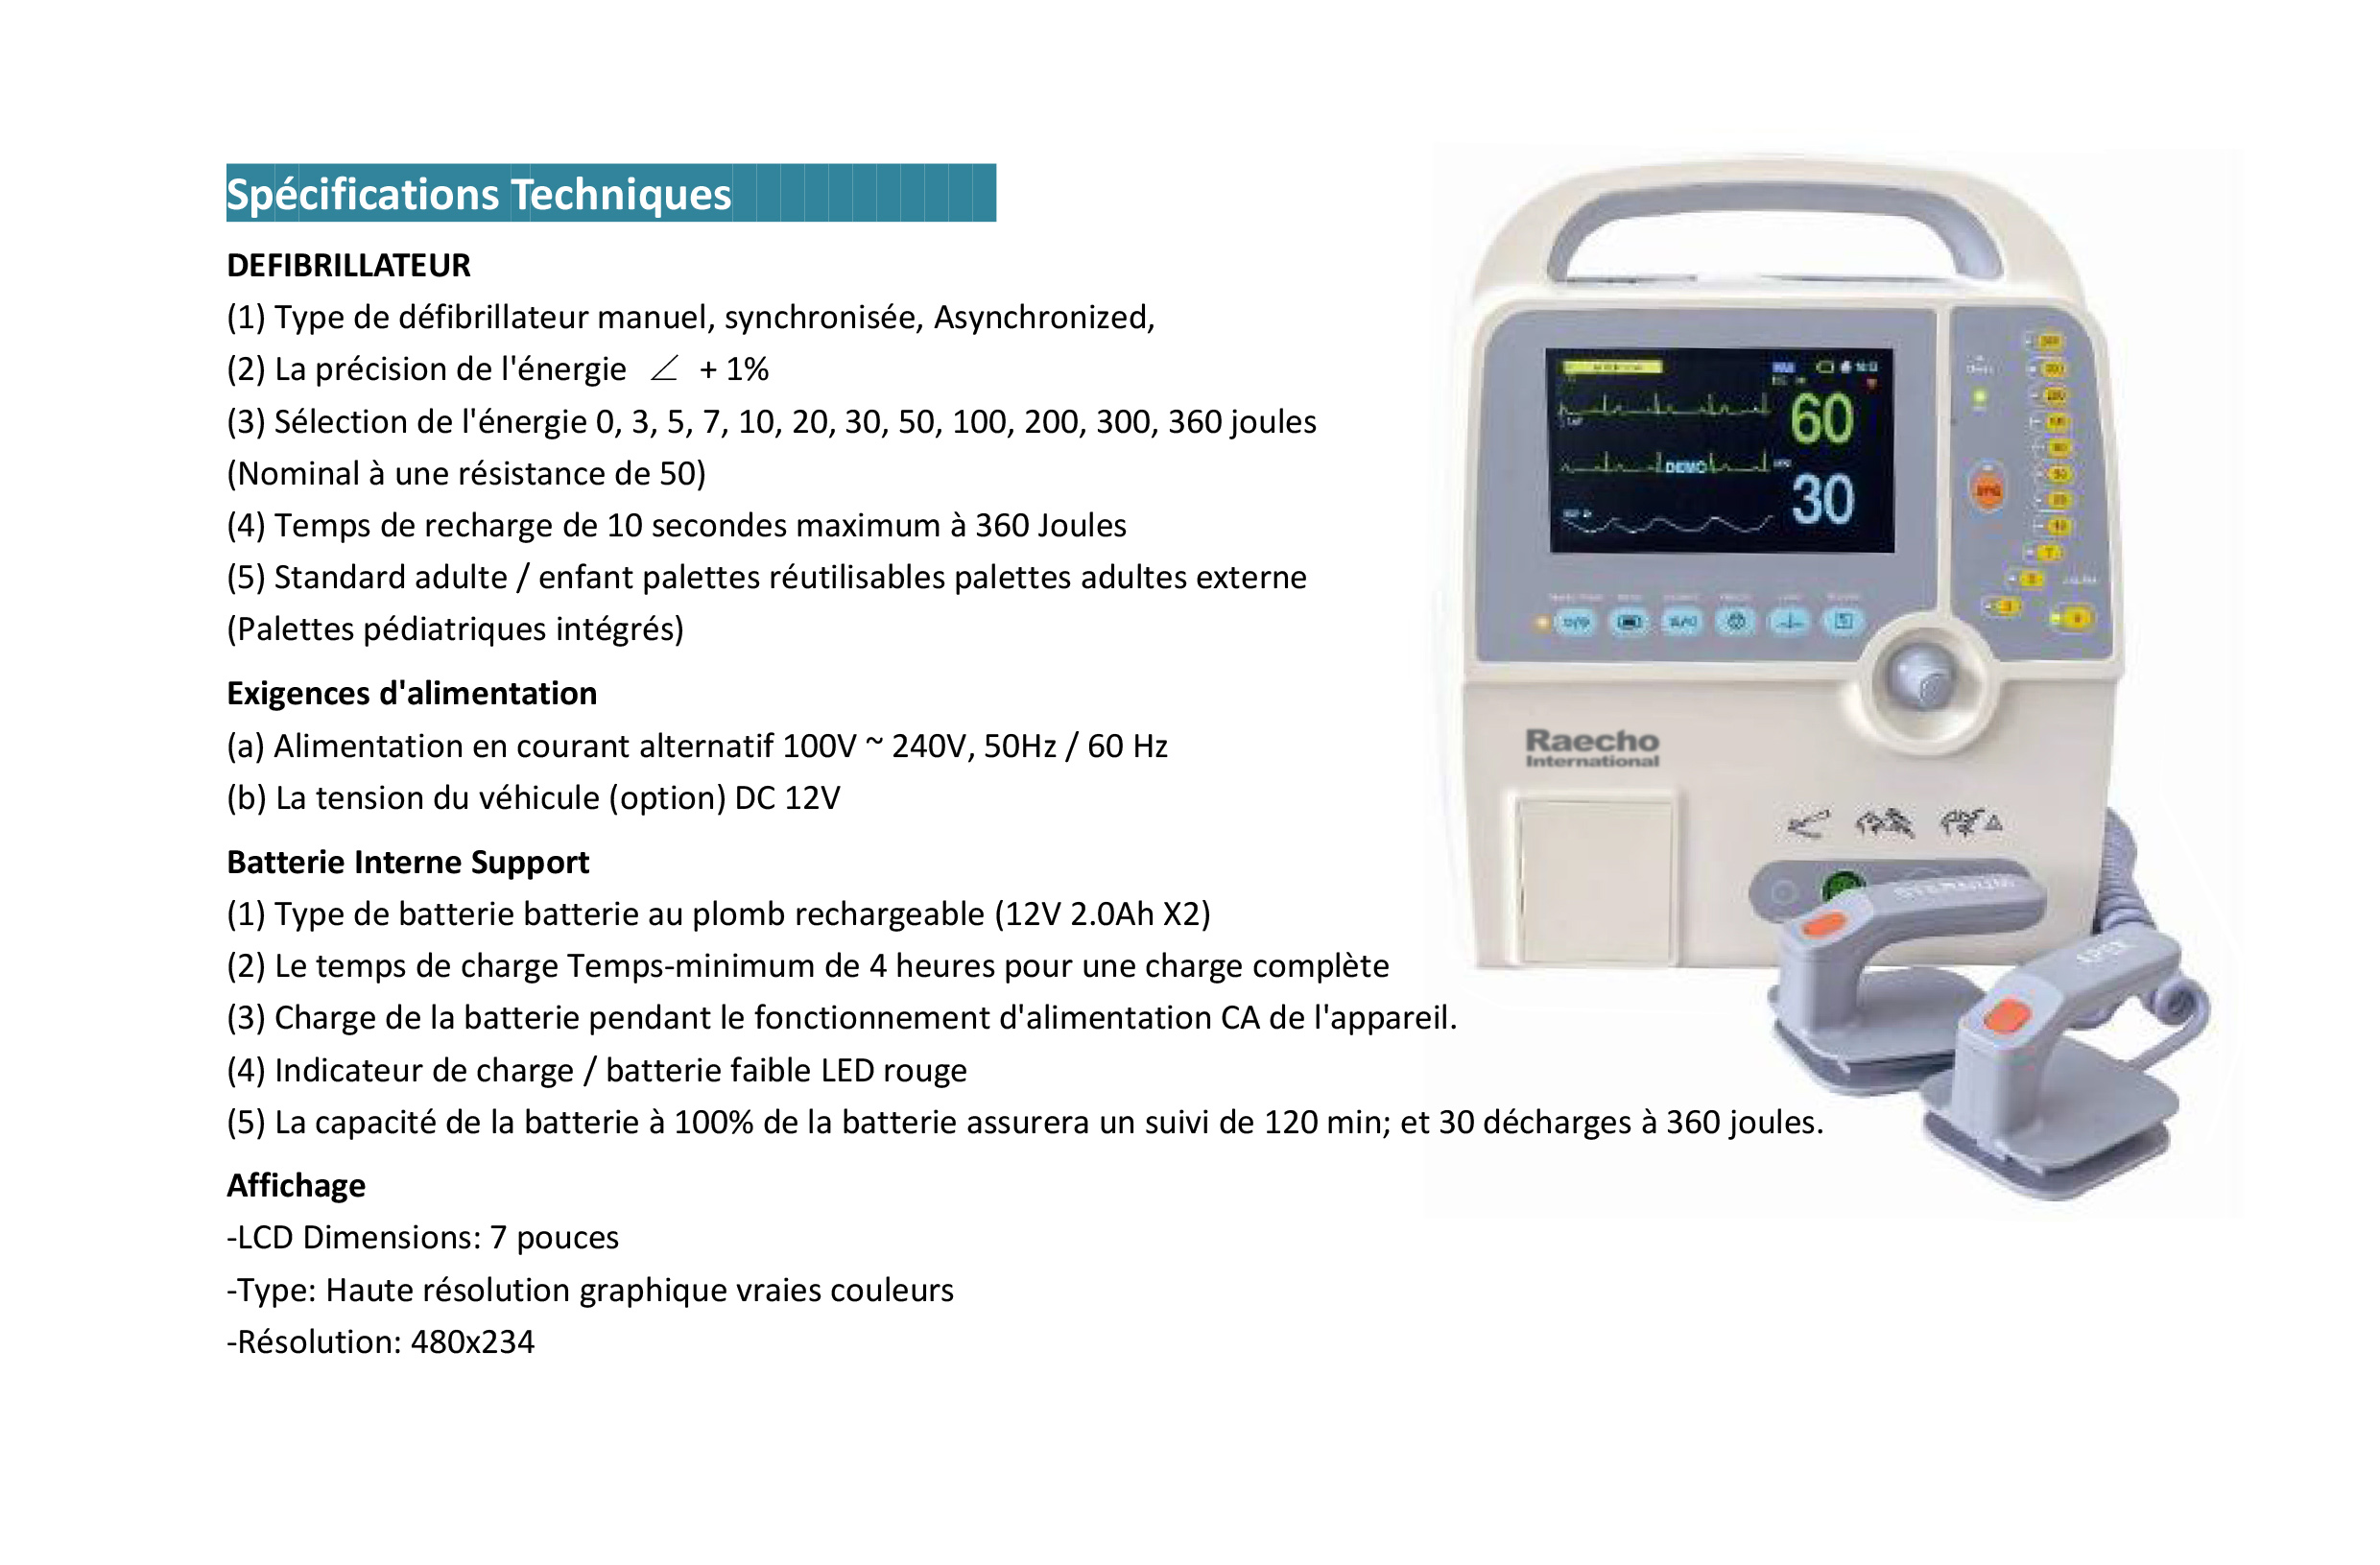 Raecho-Defibrillator-RD-8000D-1.jpg